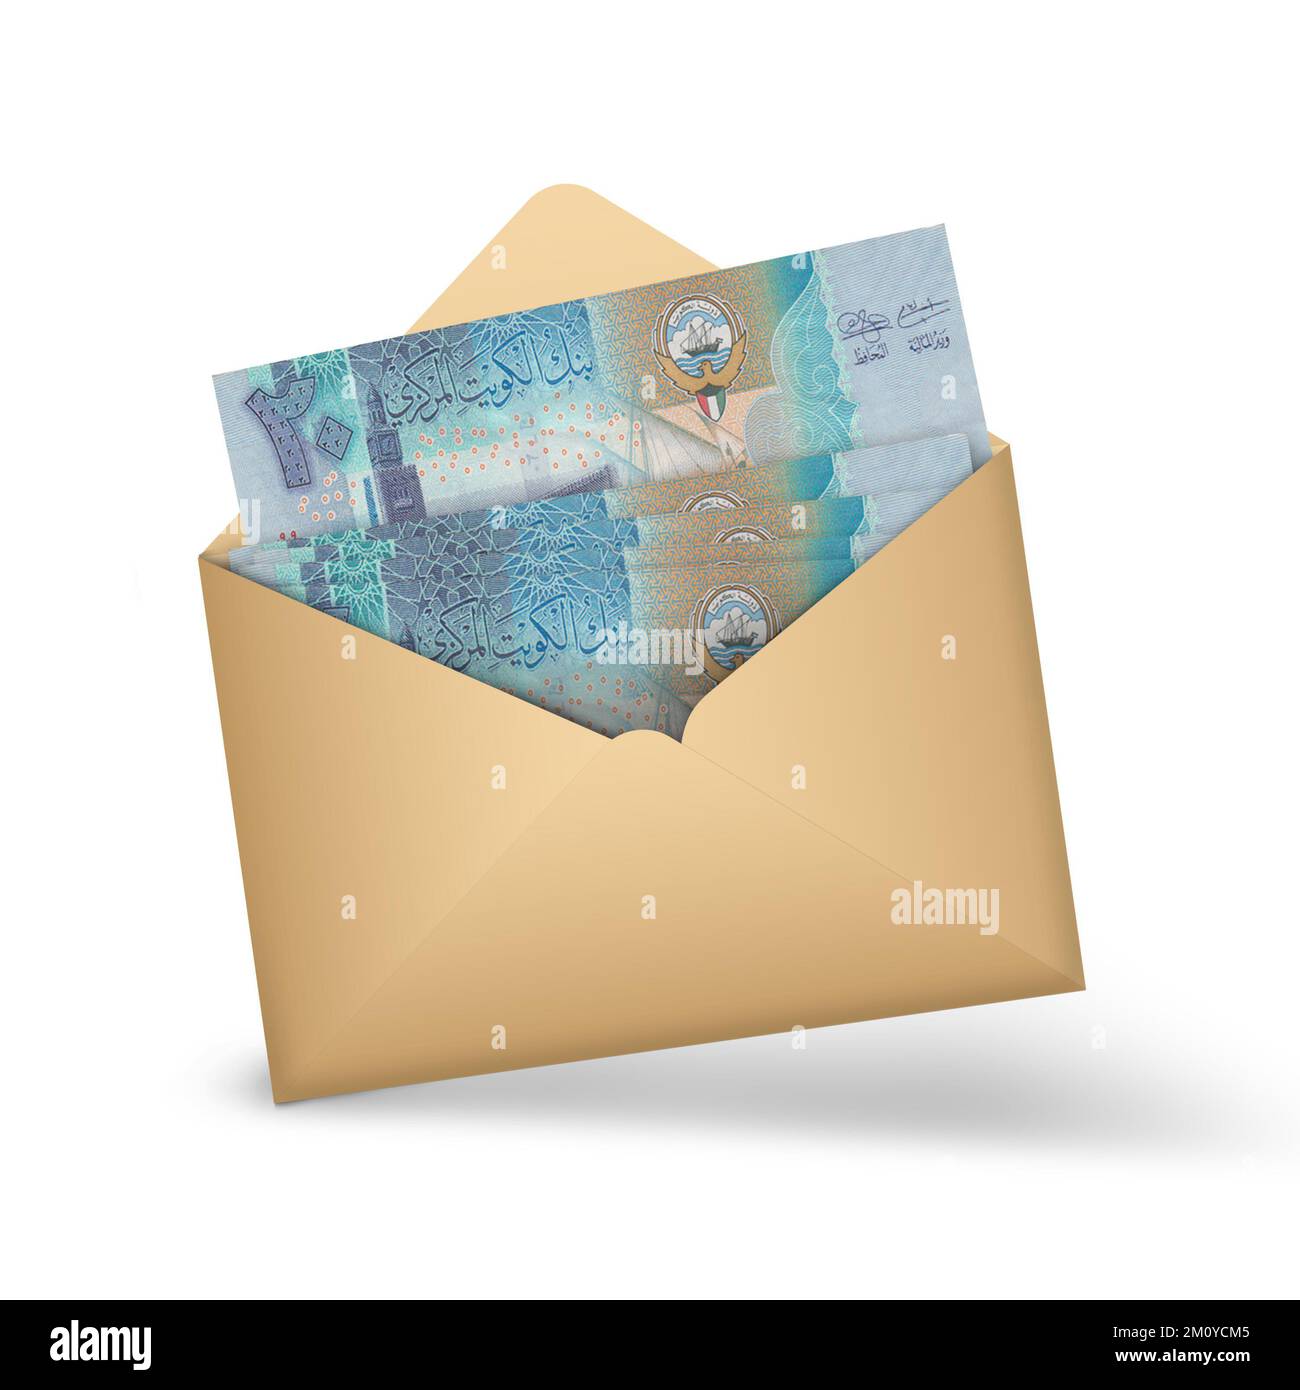 Kuwaiti dinar notes inside an open brown envelope. 3D illustration of money in an open envelope Stock Photo